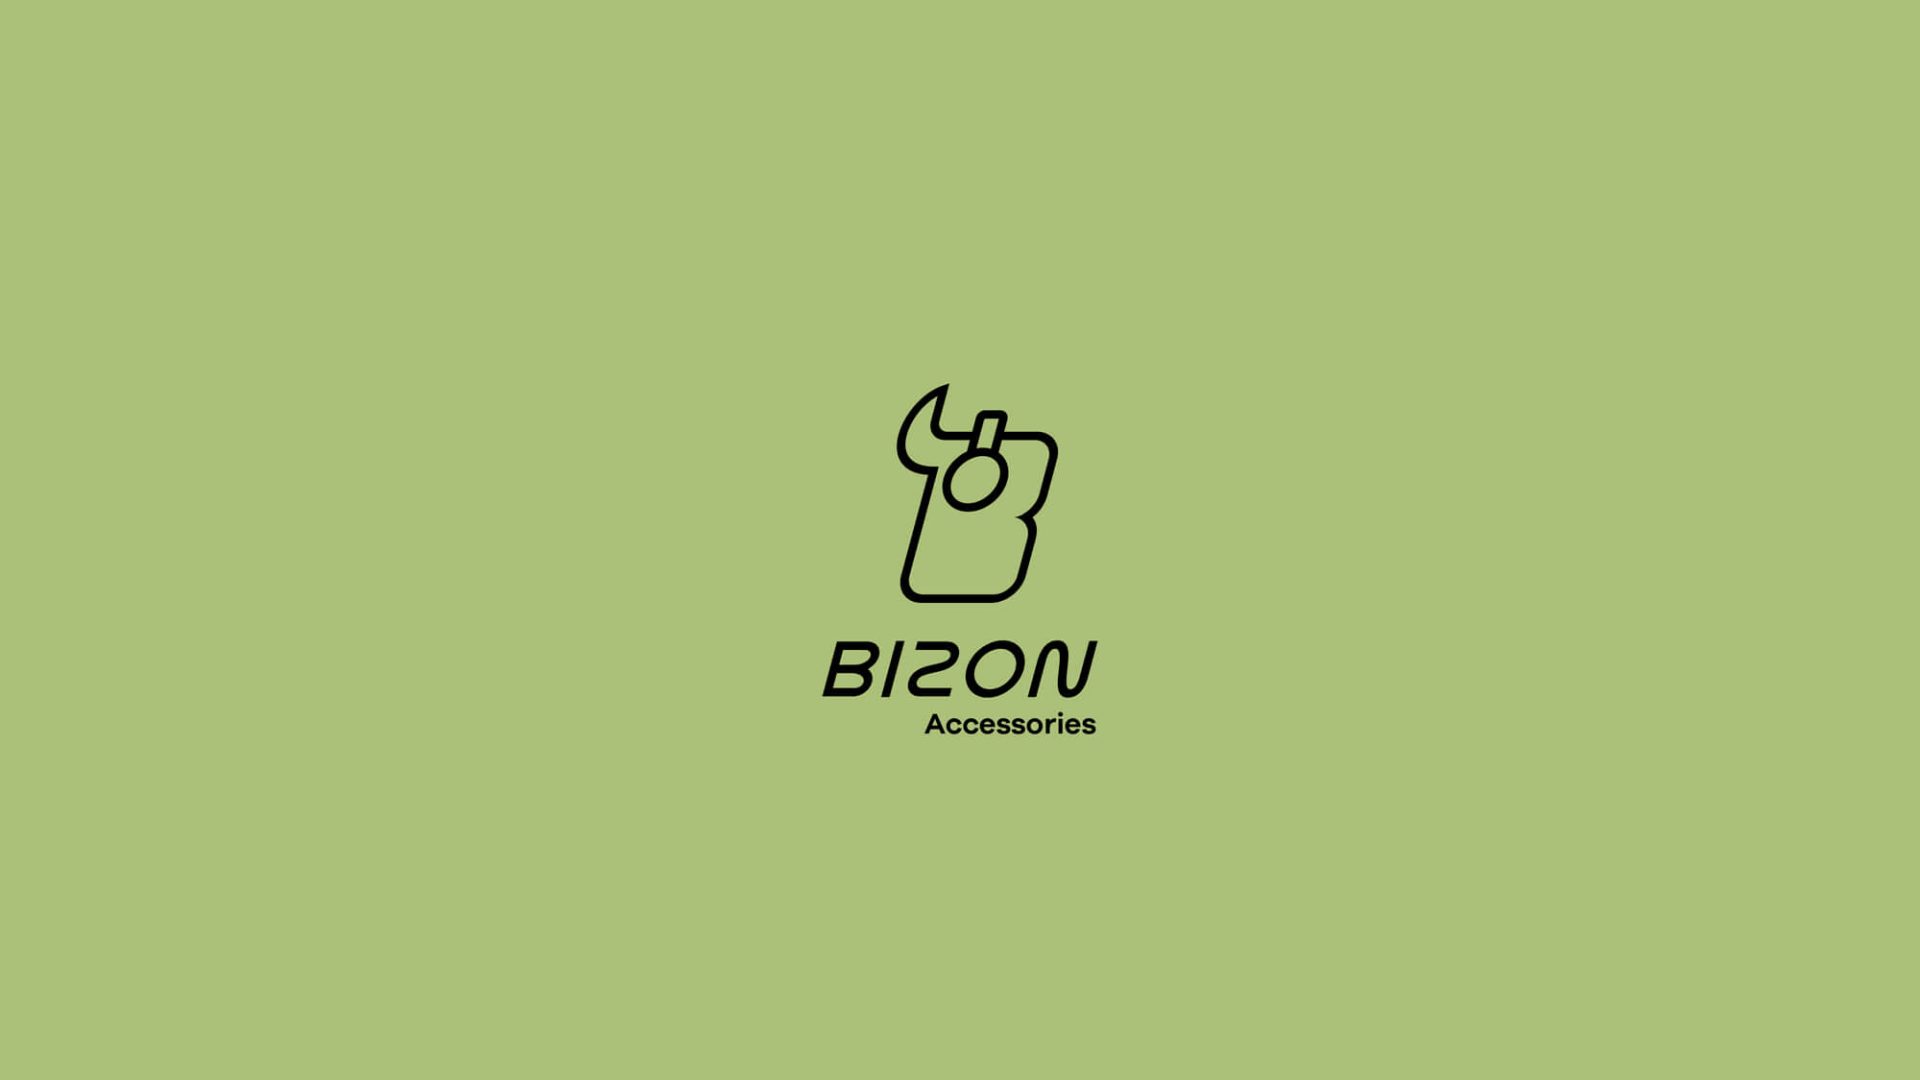 05 Bizon - Accessories logo-01